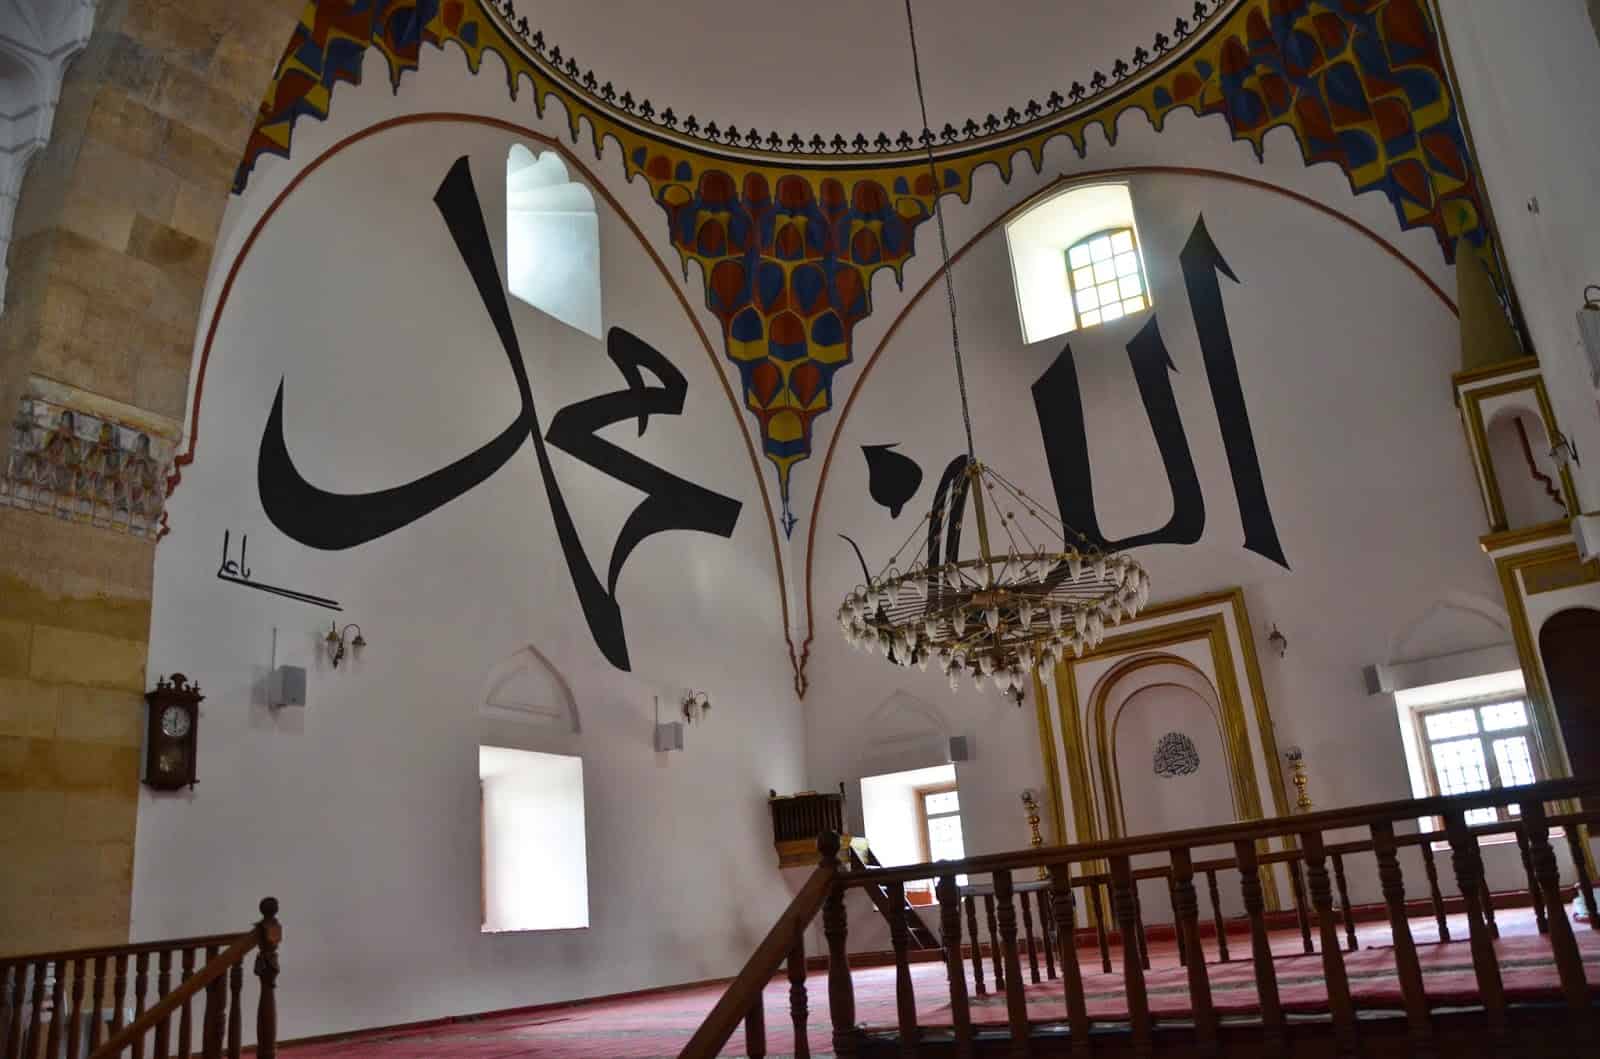 Prayer hall of the Ismail Bey Mosque in Kastamonu, Turkey